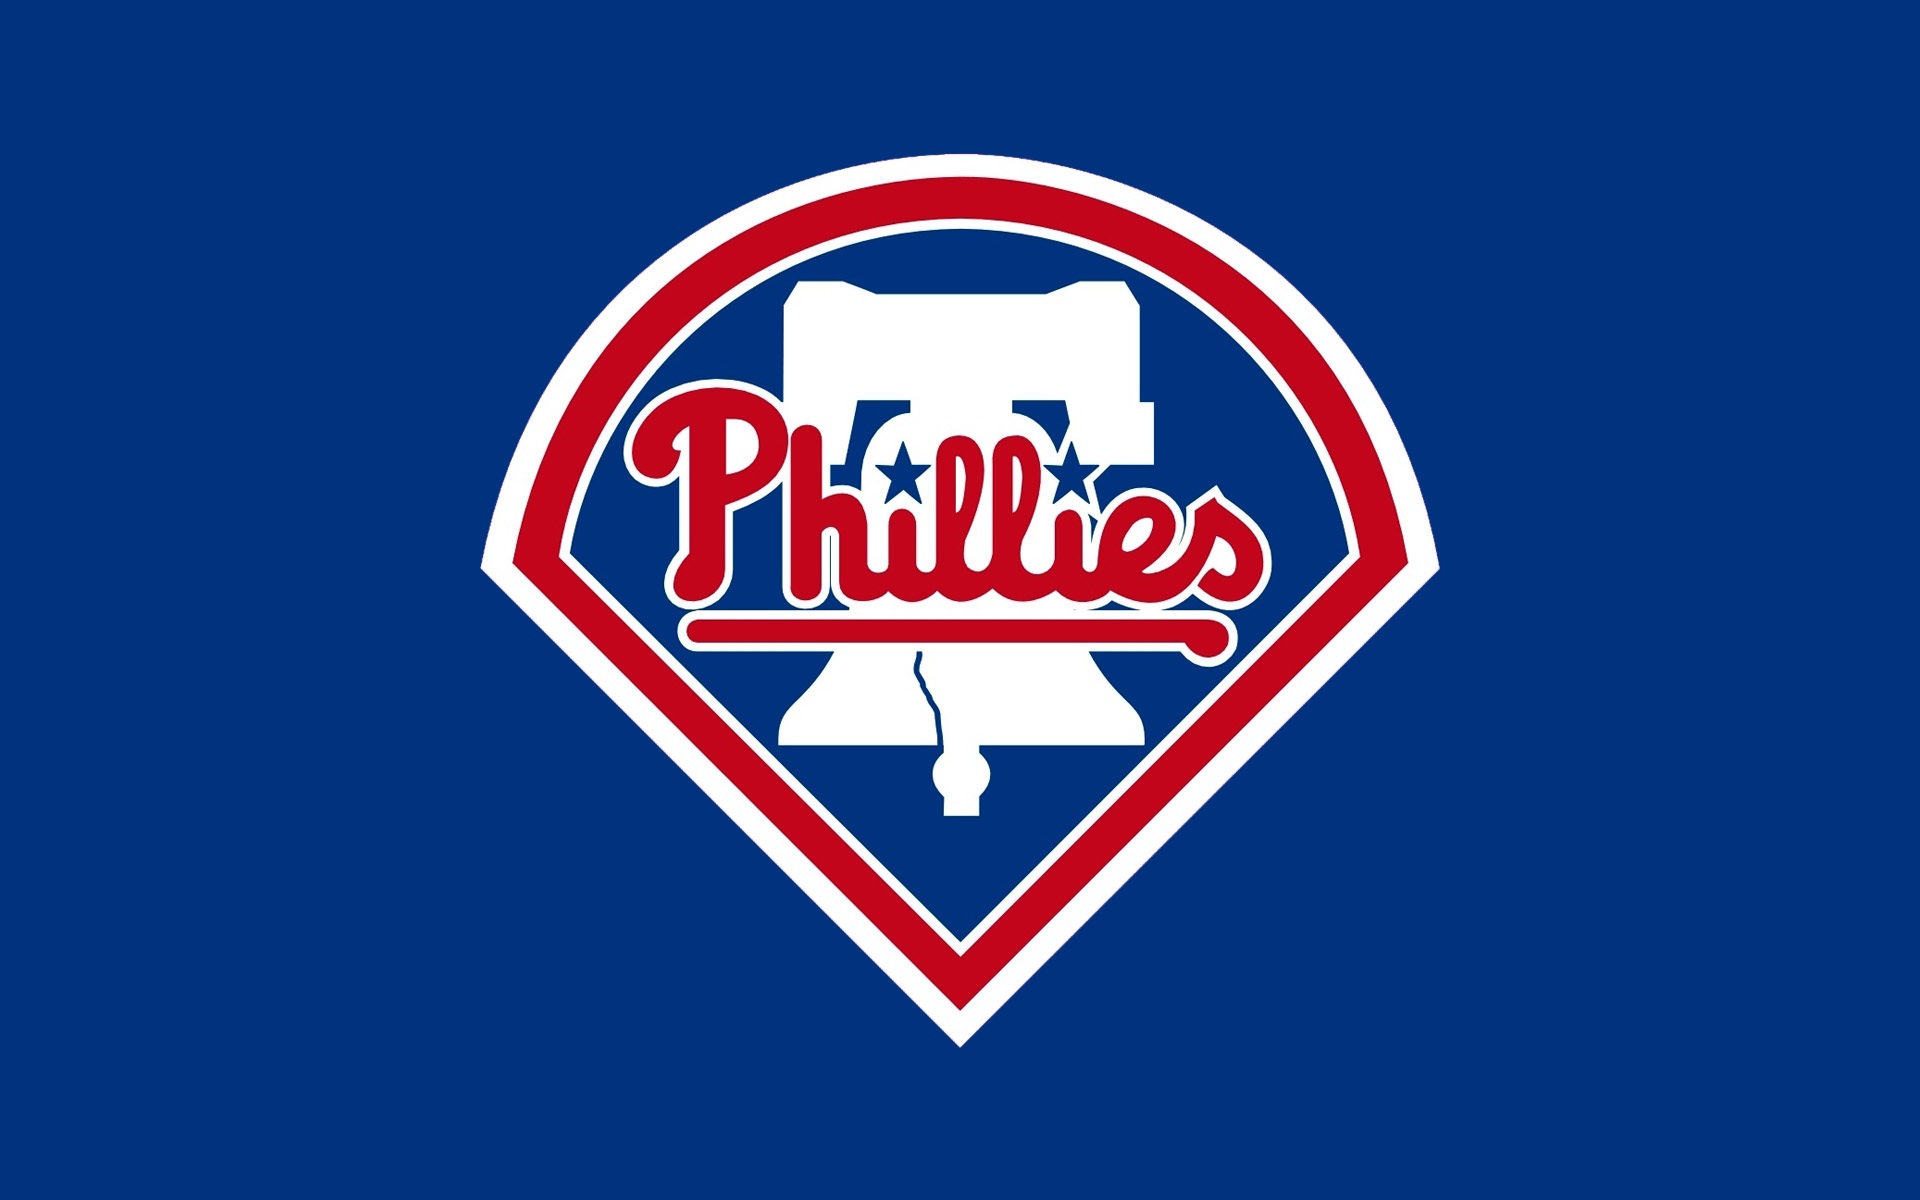 Philadelphia Phillies Full HD Wallpaper And Background